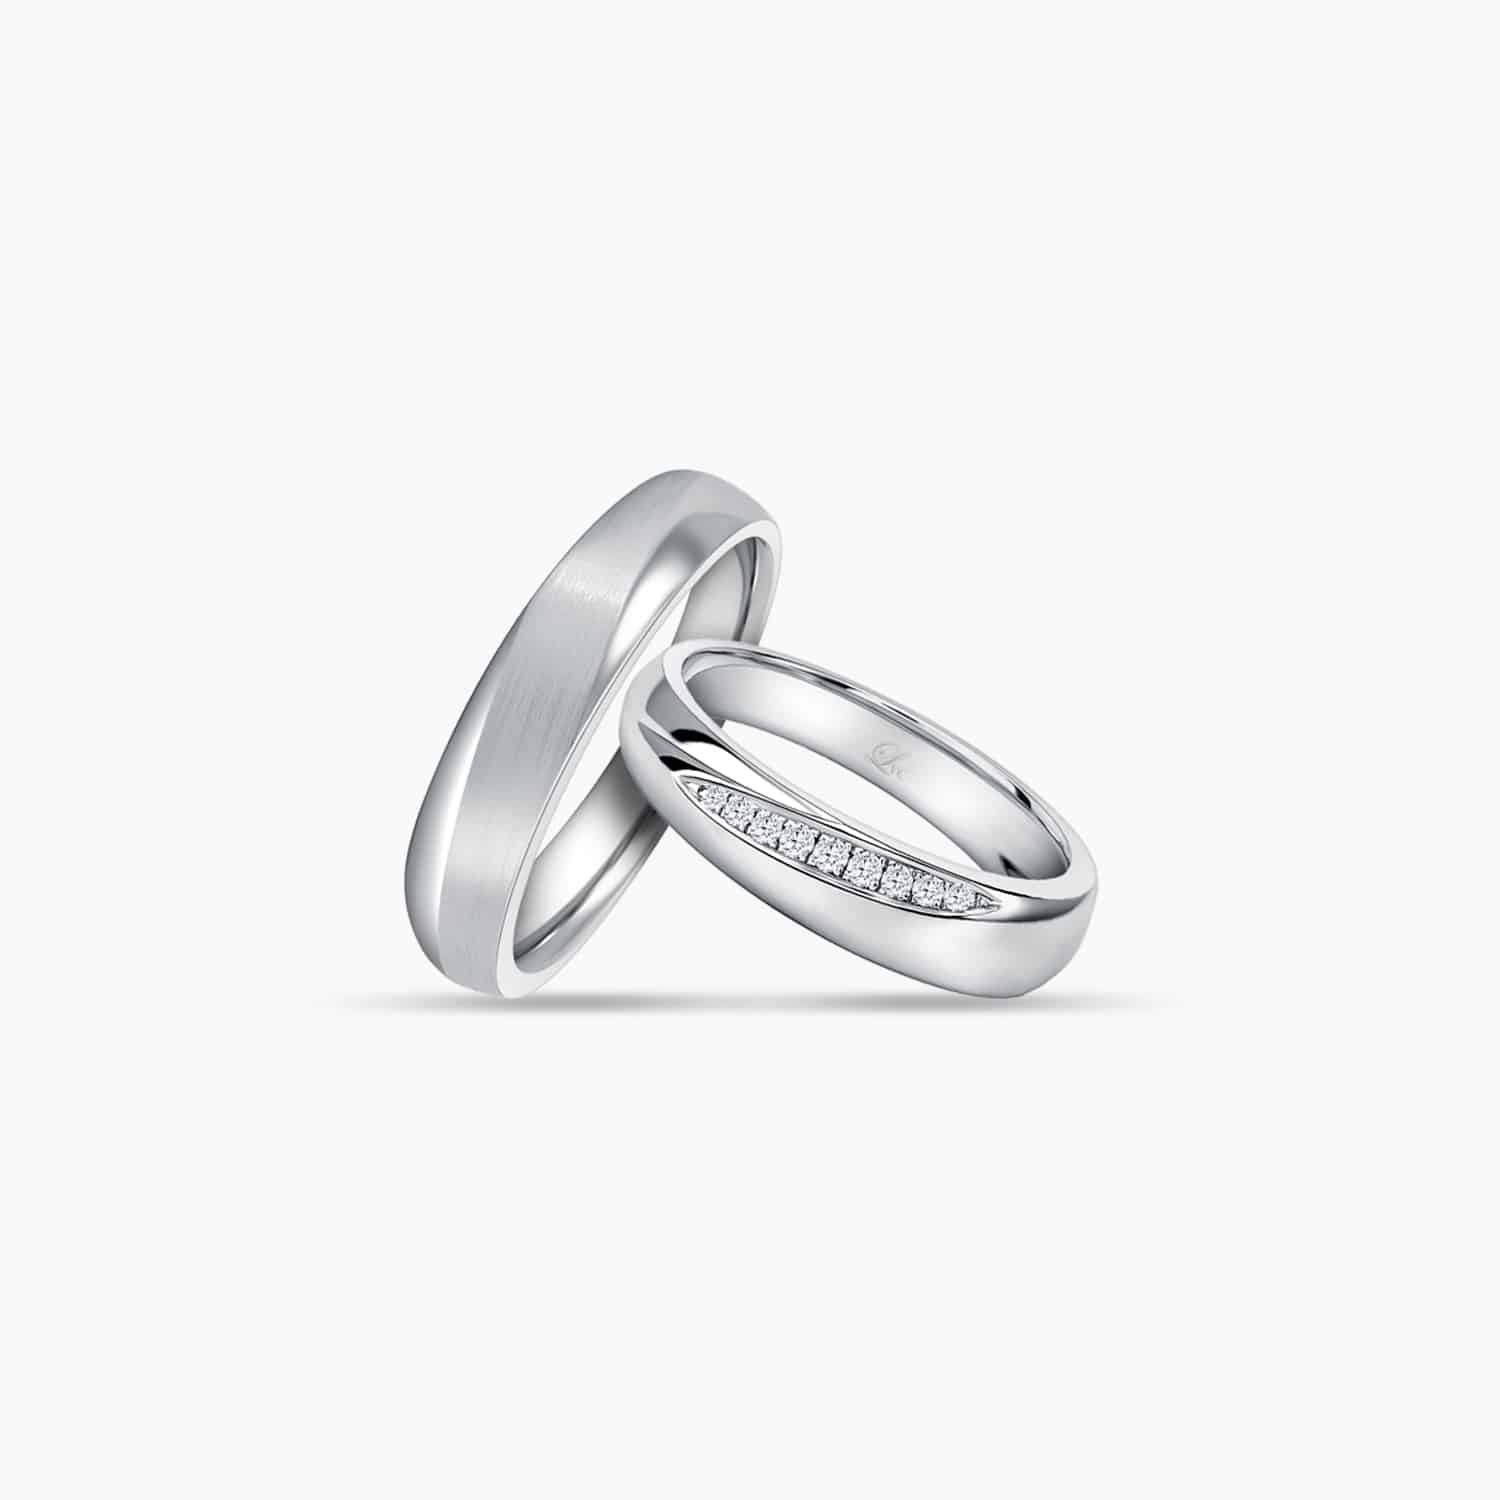 LVC PURETE TRUST WEDDING BAND IN PLATINUM WITH DIAMONDS a set of wedding bands in platinum with diamonds 钻石 戒指 cincin diamond